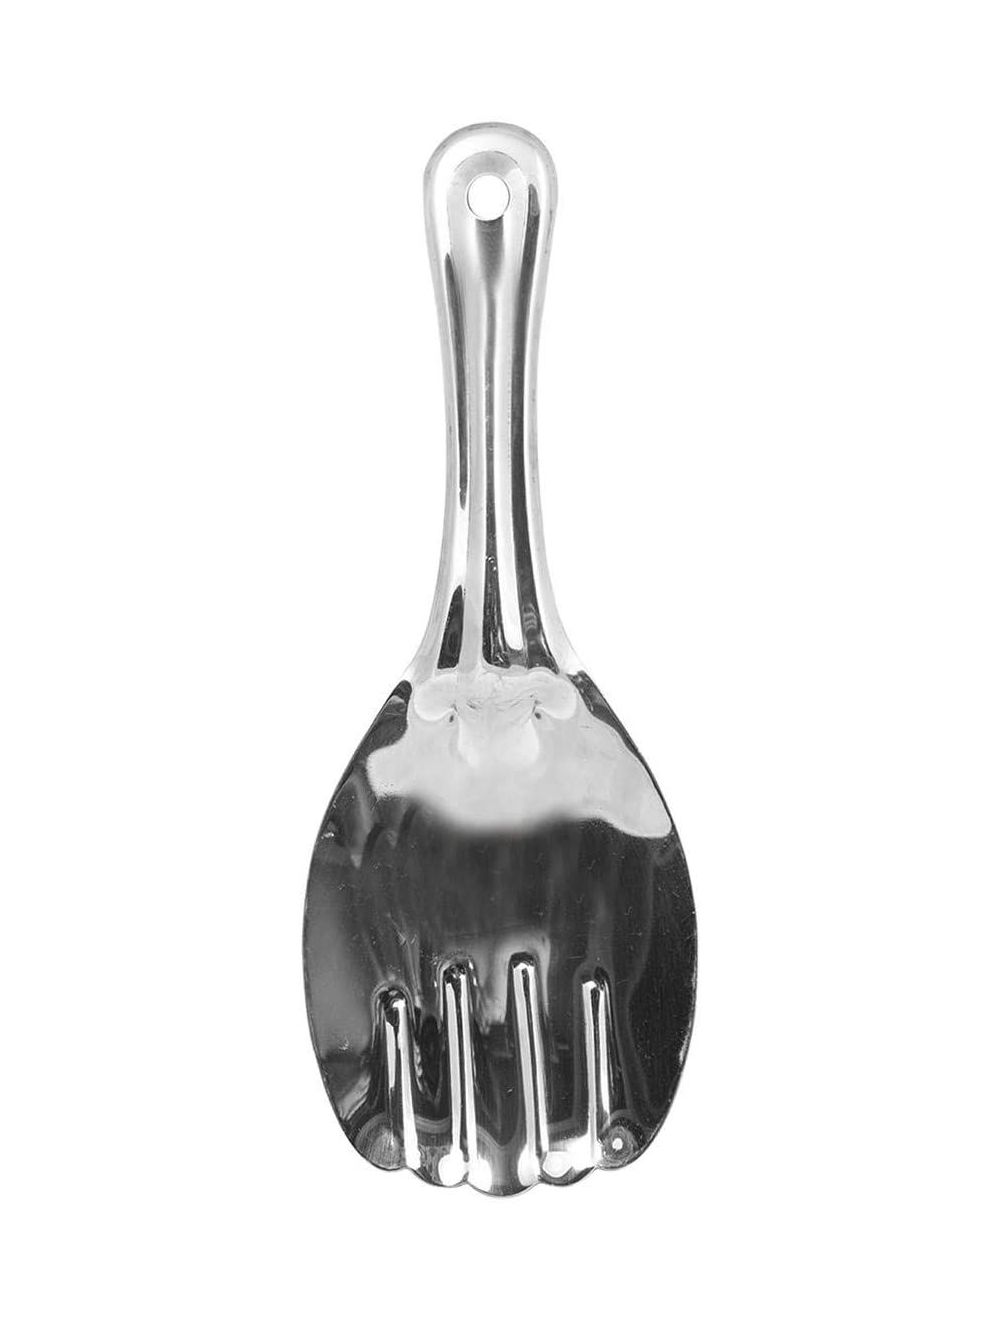 Raj 8 cm Rice Panja Deluxe Spoon-RSPD02,Silver